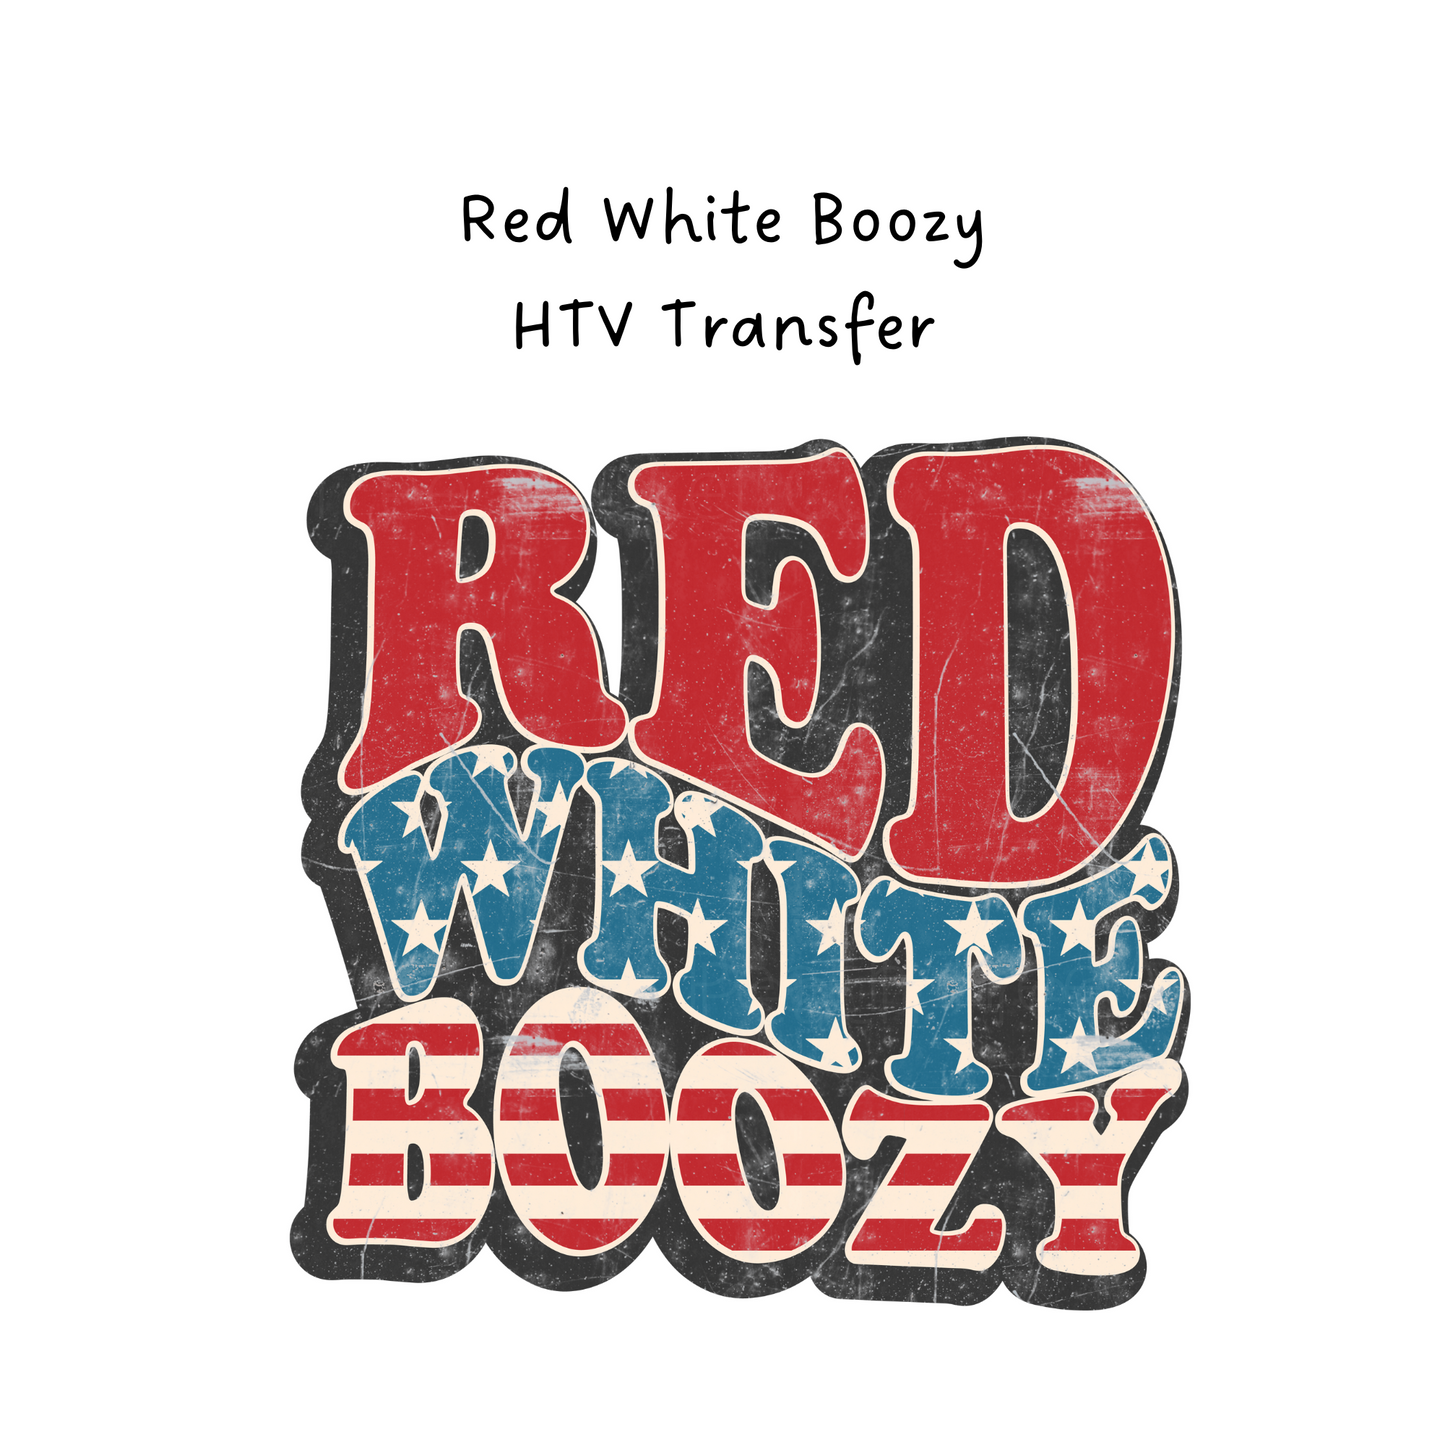 Red White Boozy HTV Transfer